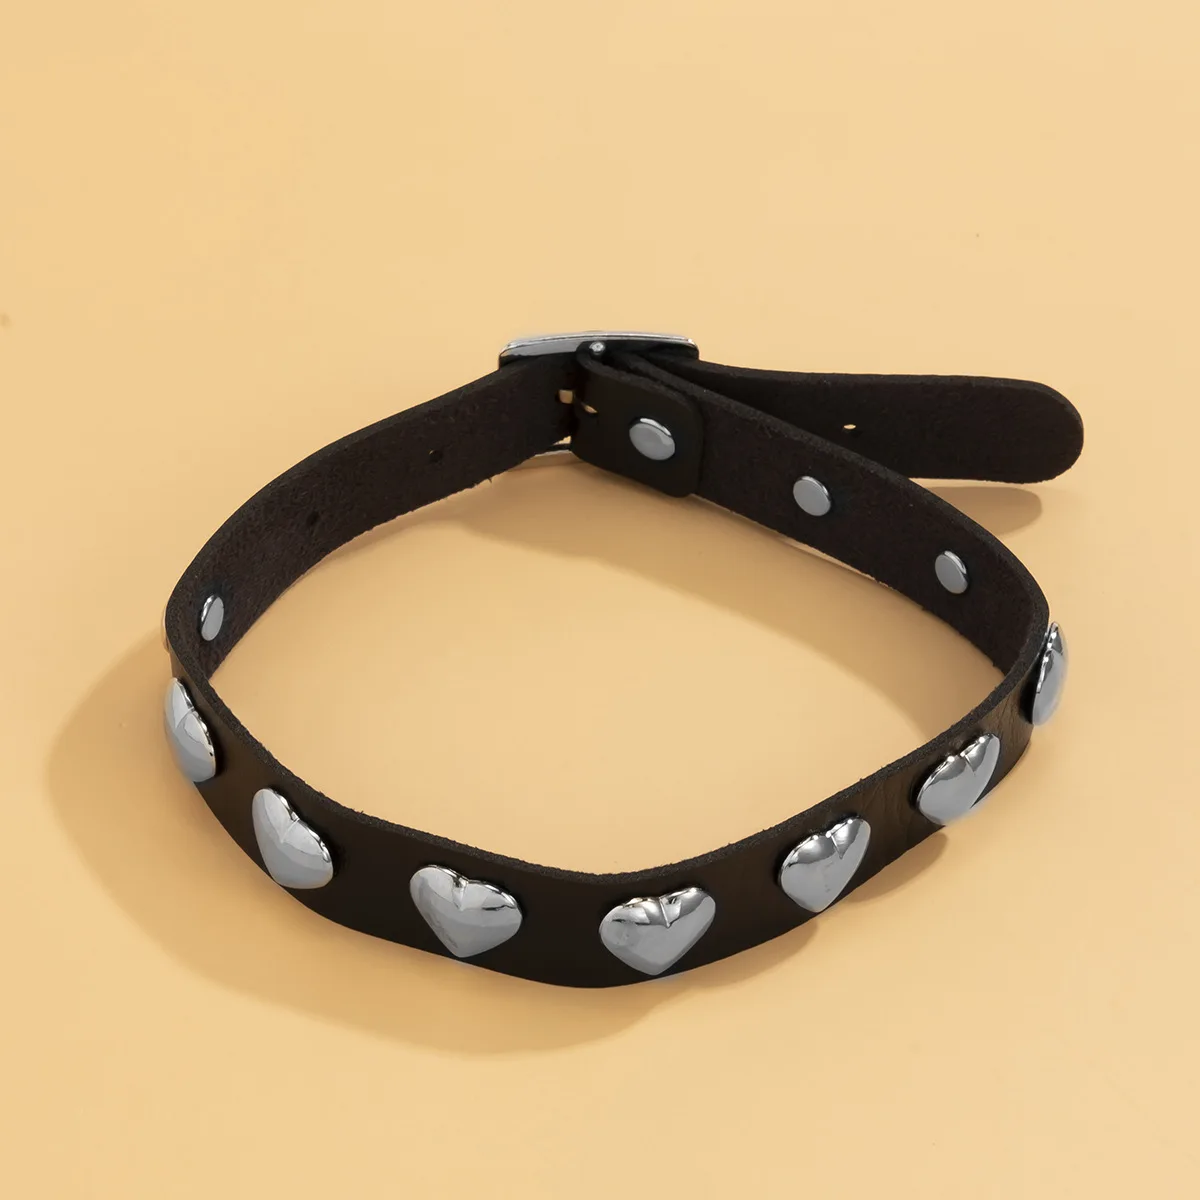 Manfnee PU Leather Choker Punk Emo Heart Pendant Chain Choker Collar  Necklace for Women Adjustable